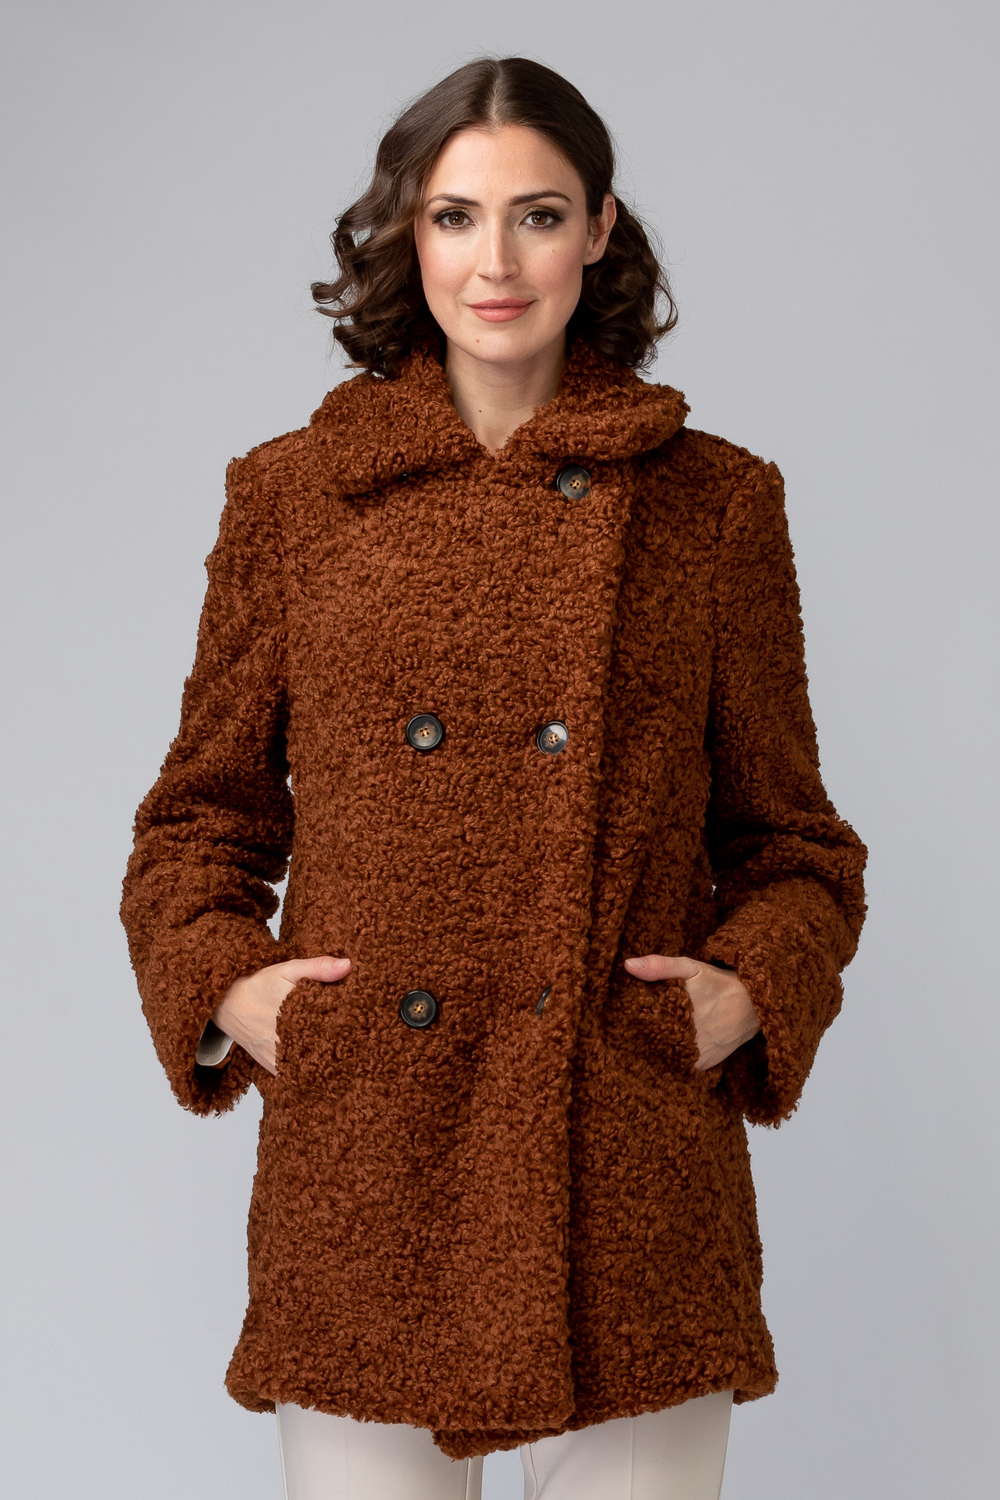 Joseph Ribkoff coat style 193719. Brown